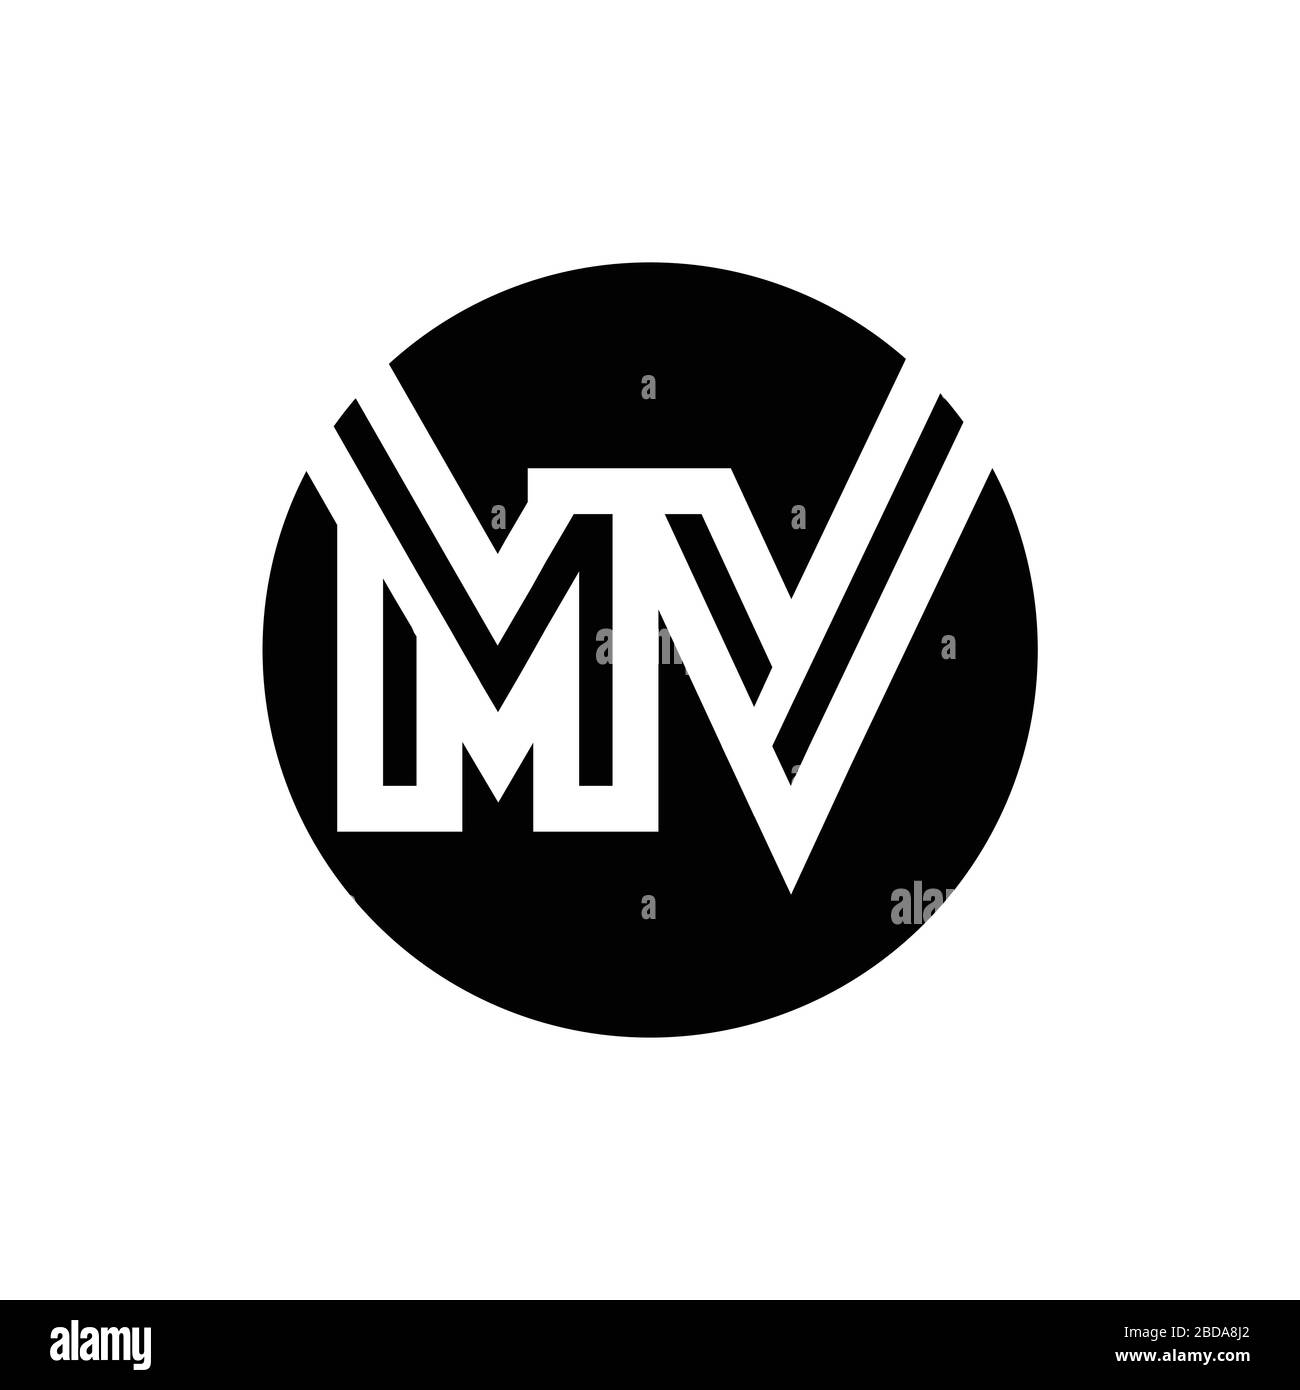 MV Svg Png Icon Free Download (#224993) - OnlineWebFonts.COM